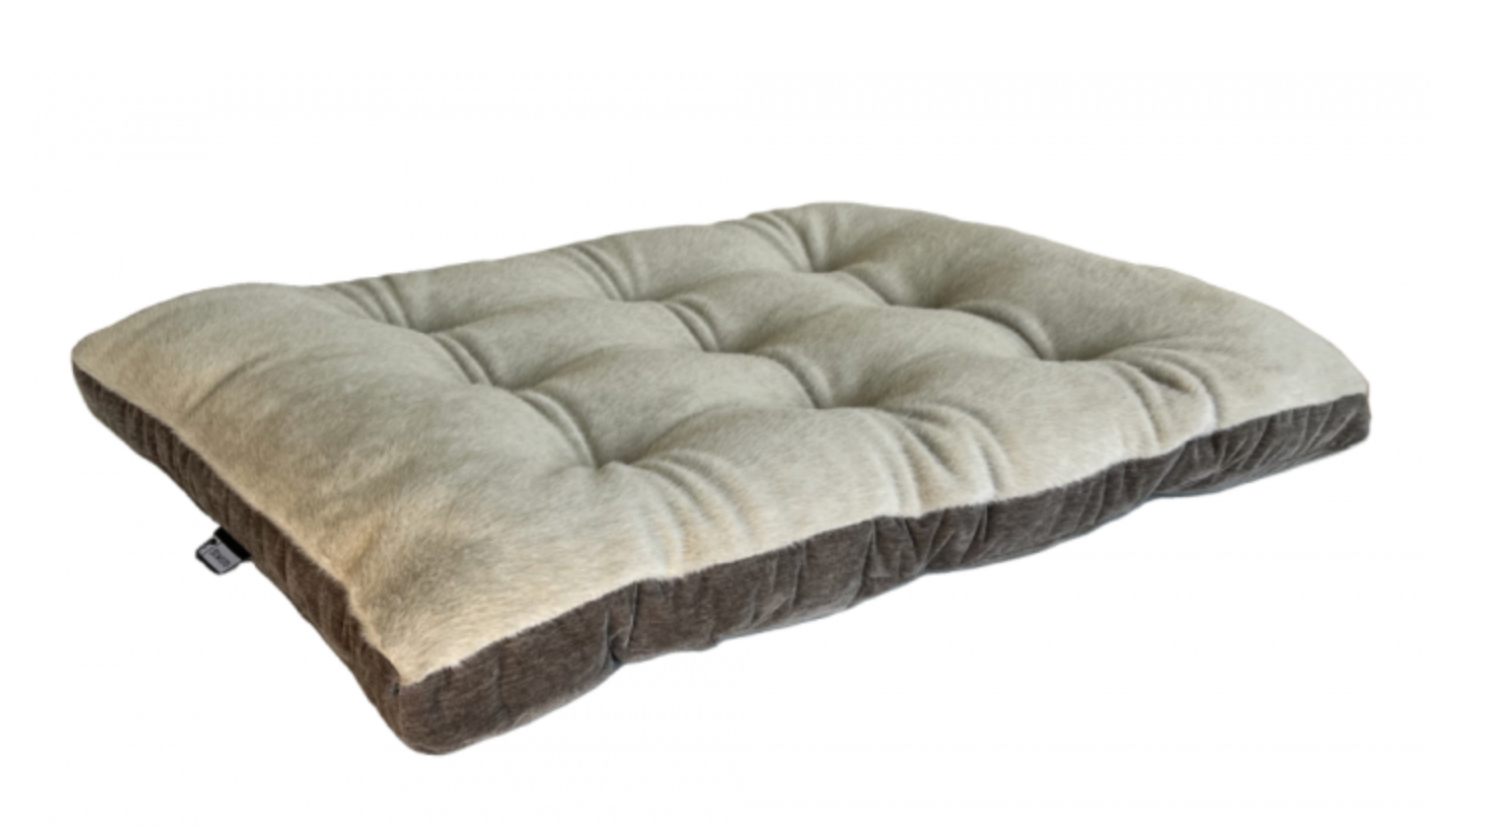 Bowsers Dream Futon Dog Bed - Fawn/Bark